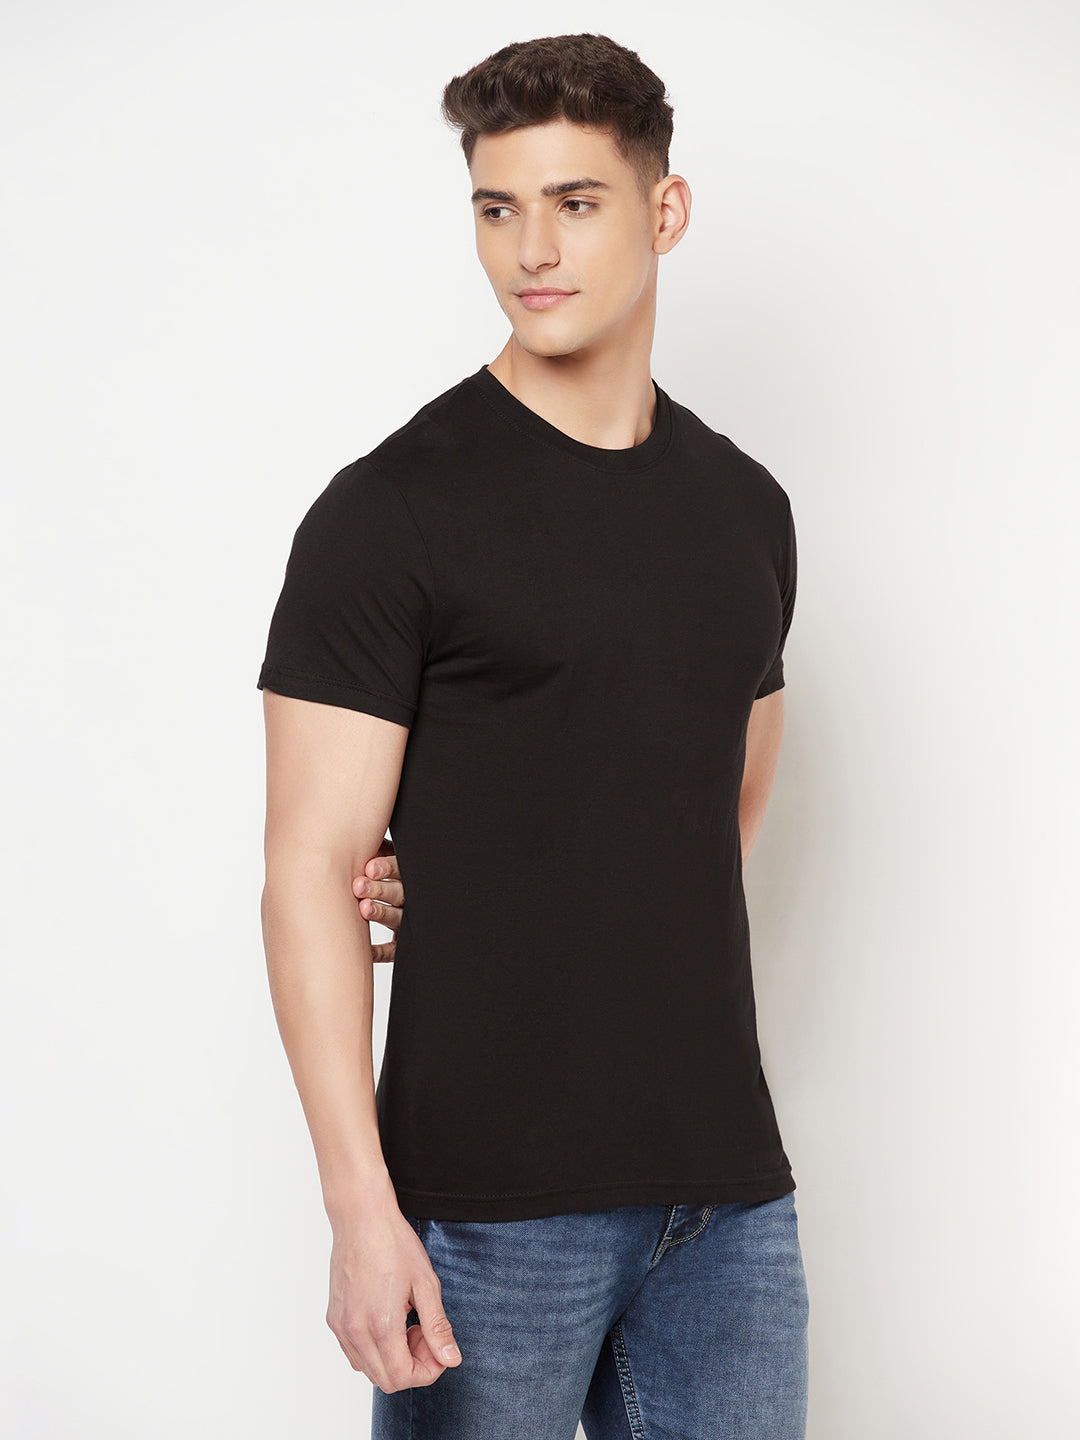 Premium Cotton Tshirts  (Pack of 2- Black,Maroon)